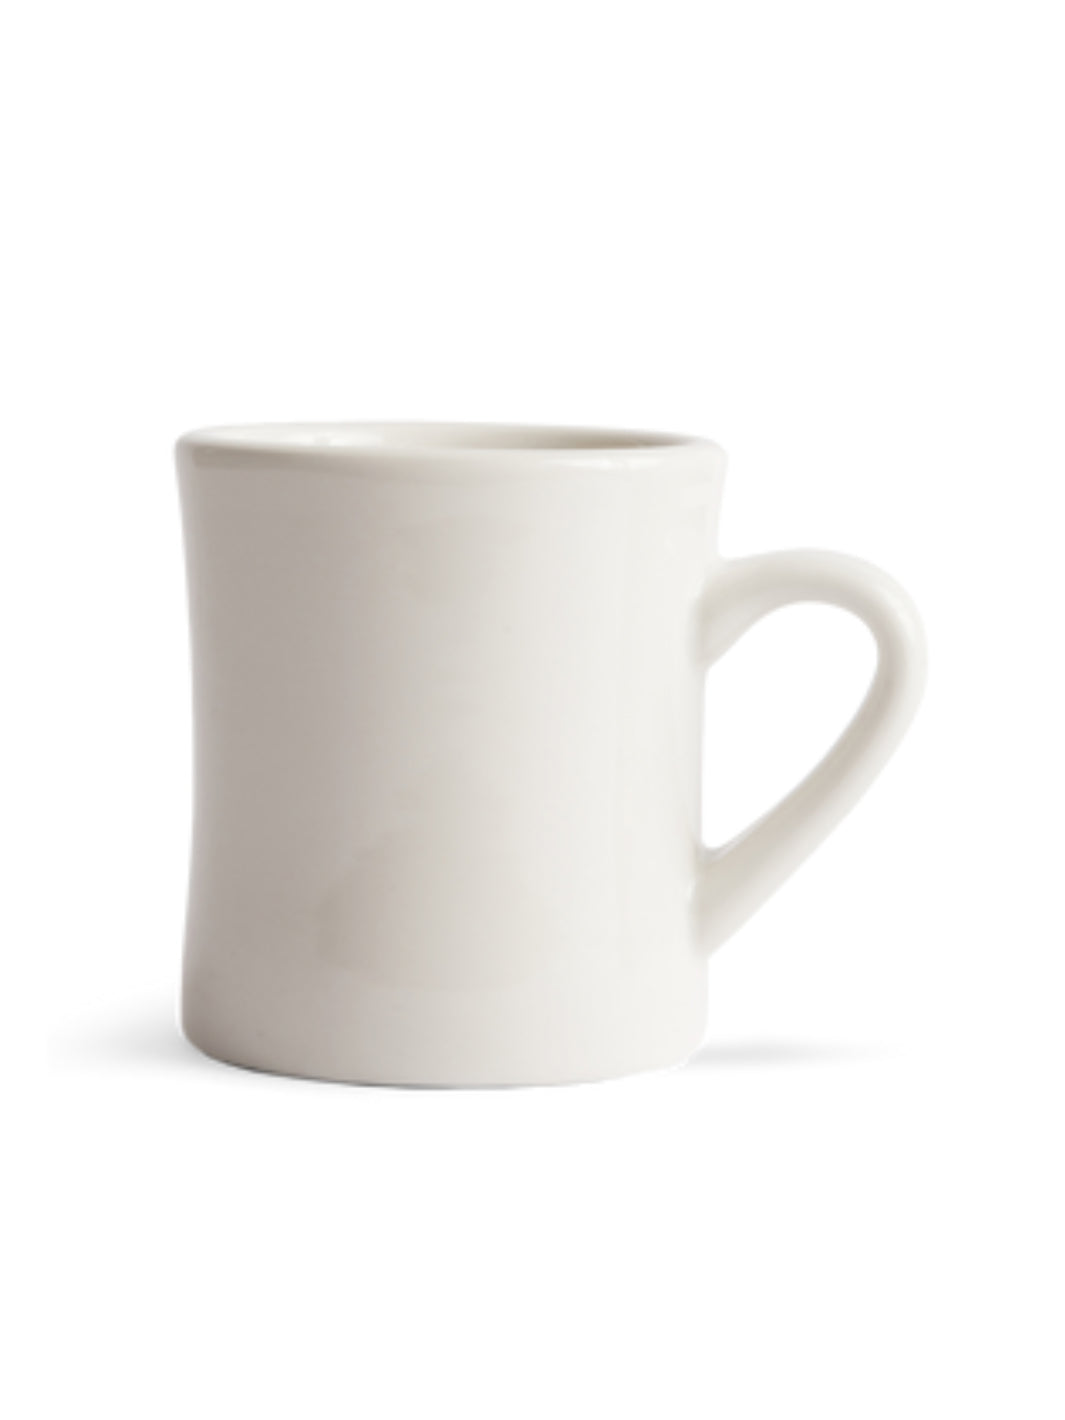 CREATED CO. Diner Mug (12oz/355ml)